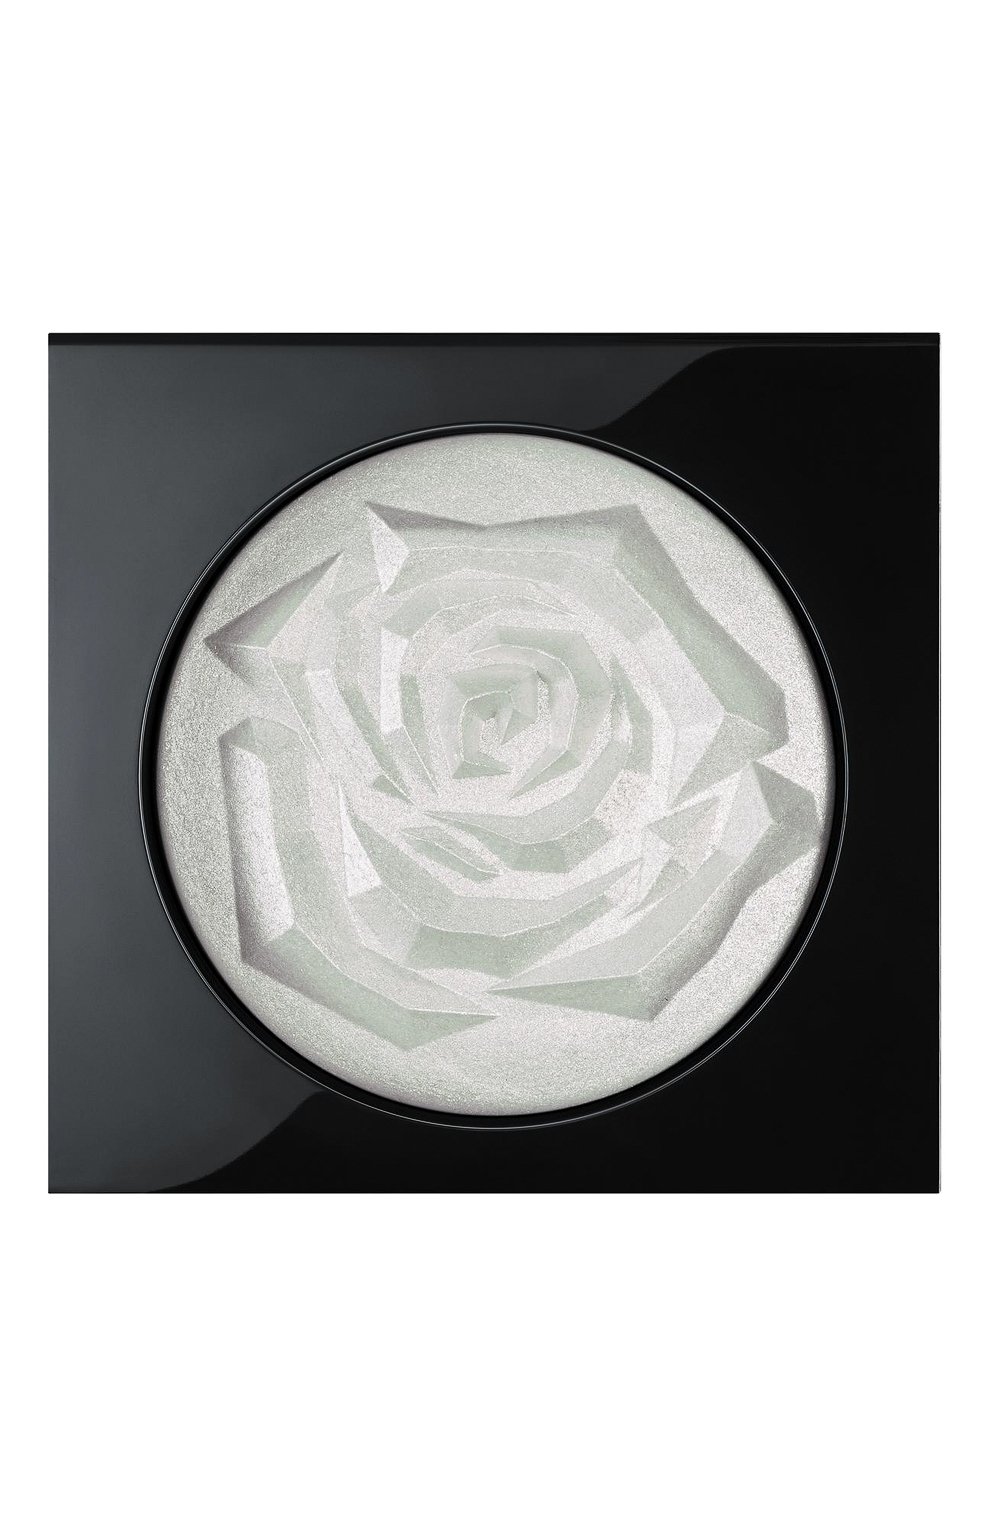 Пудра-хайлайтер для лица la rose highlighter holiday edition LANCOME бесцветного цвета, арт. 3614273122009 | Фото 3